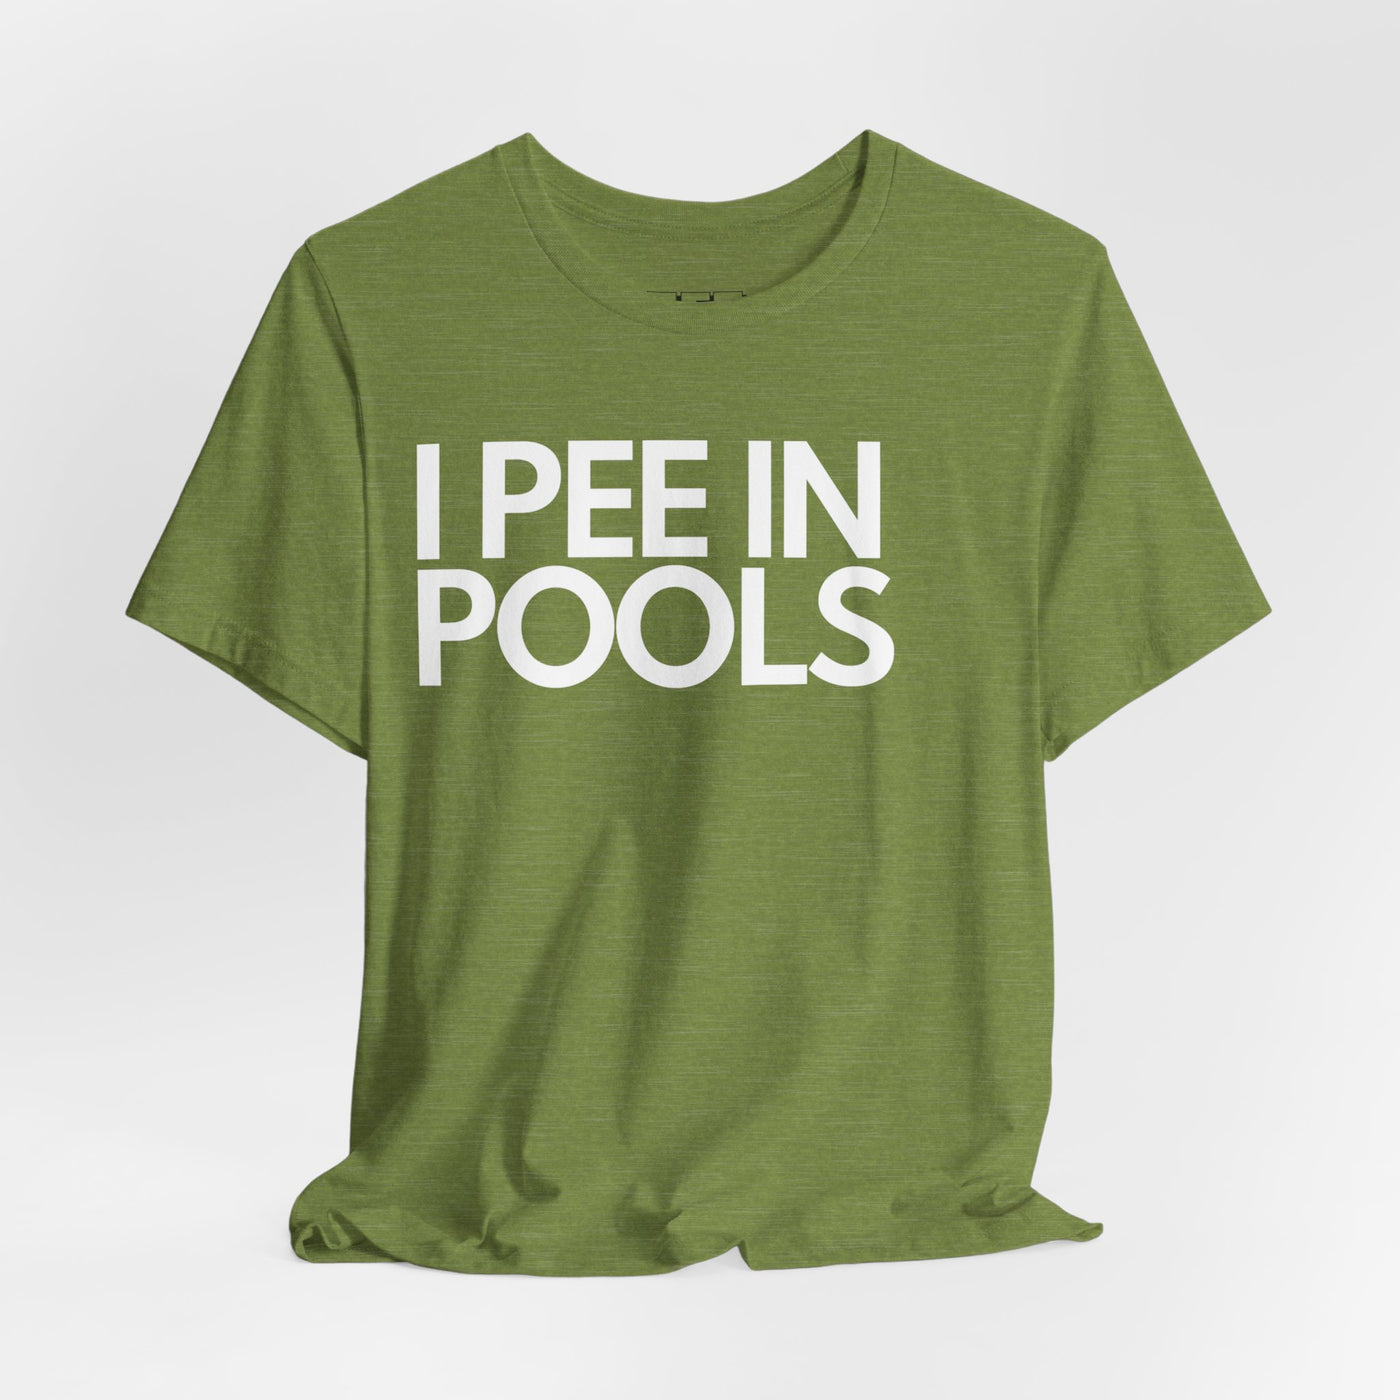 I Pee In Pools